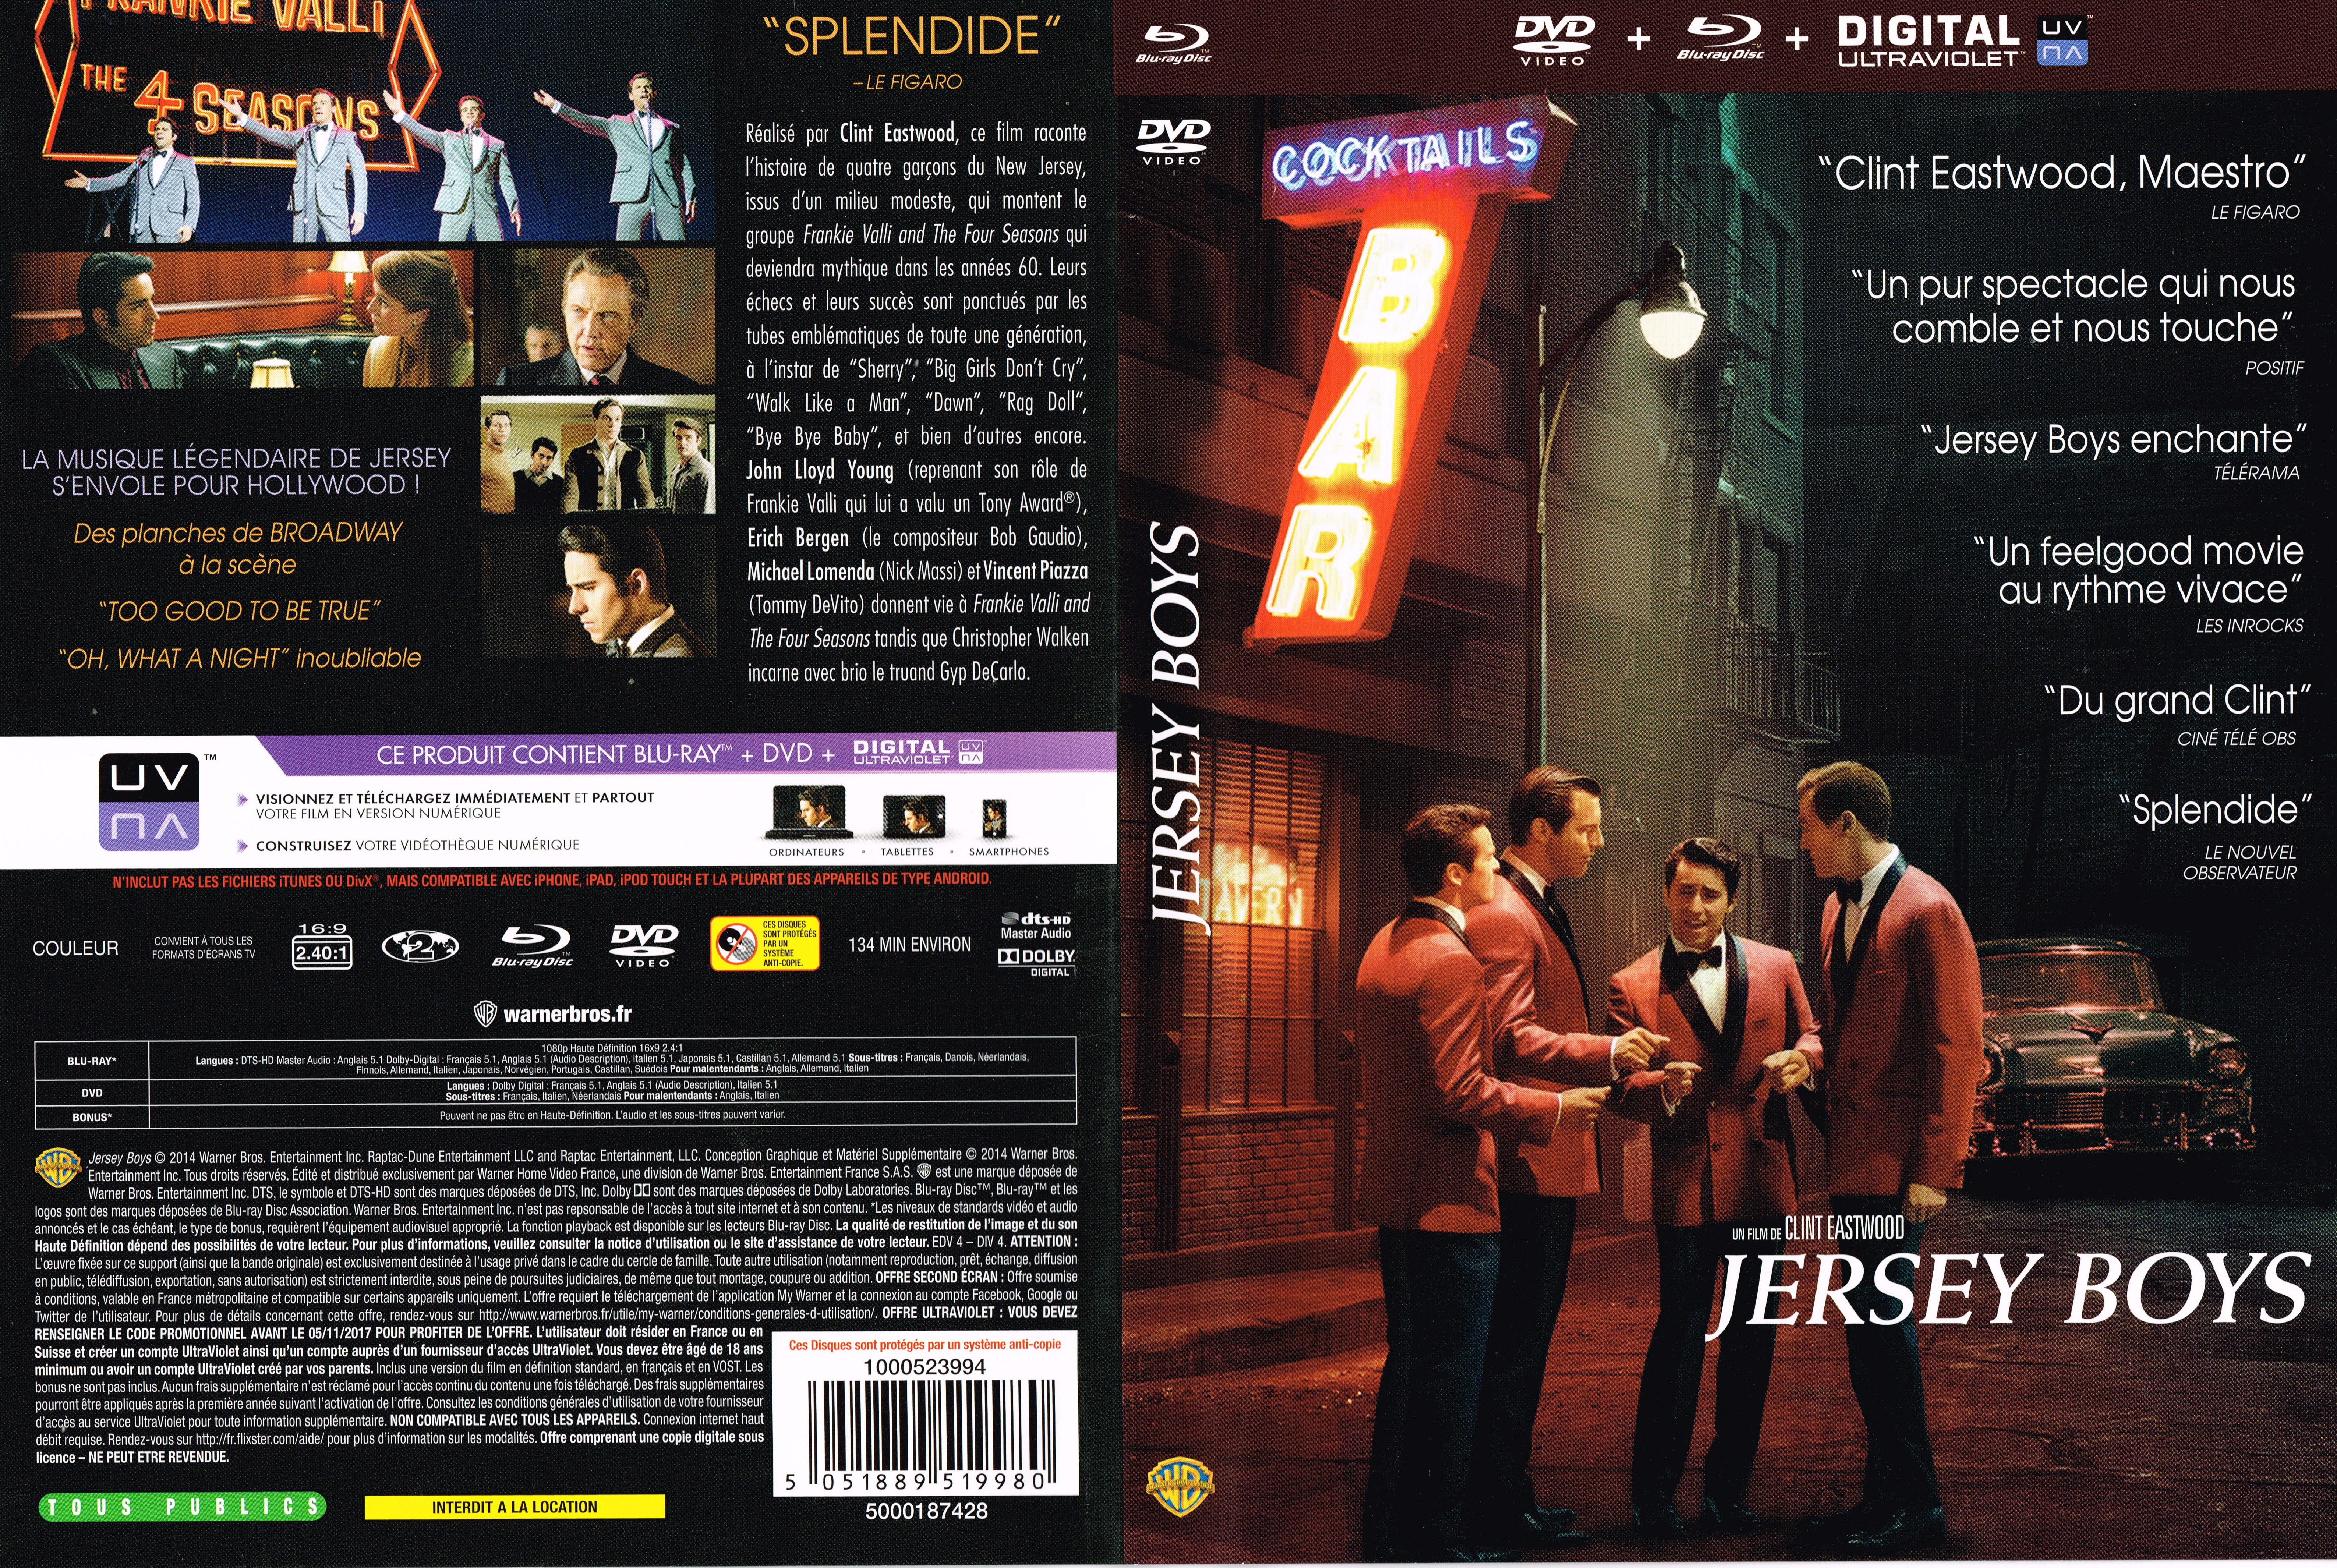 Jaquette DVD Jersey Boys v2